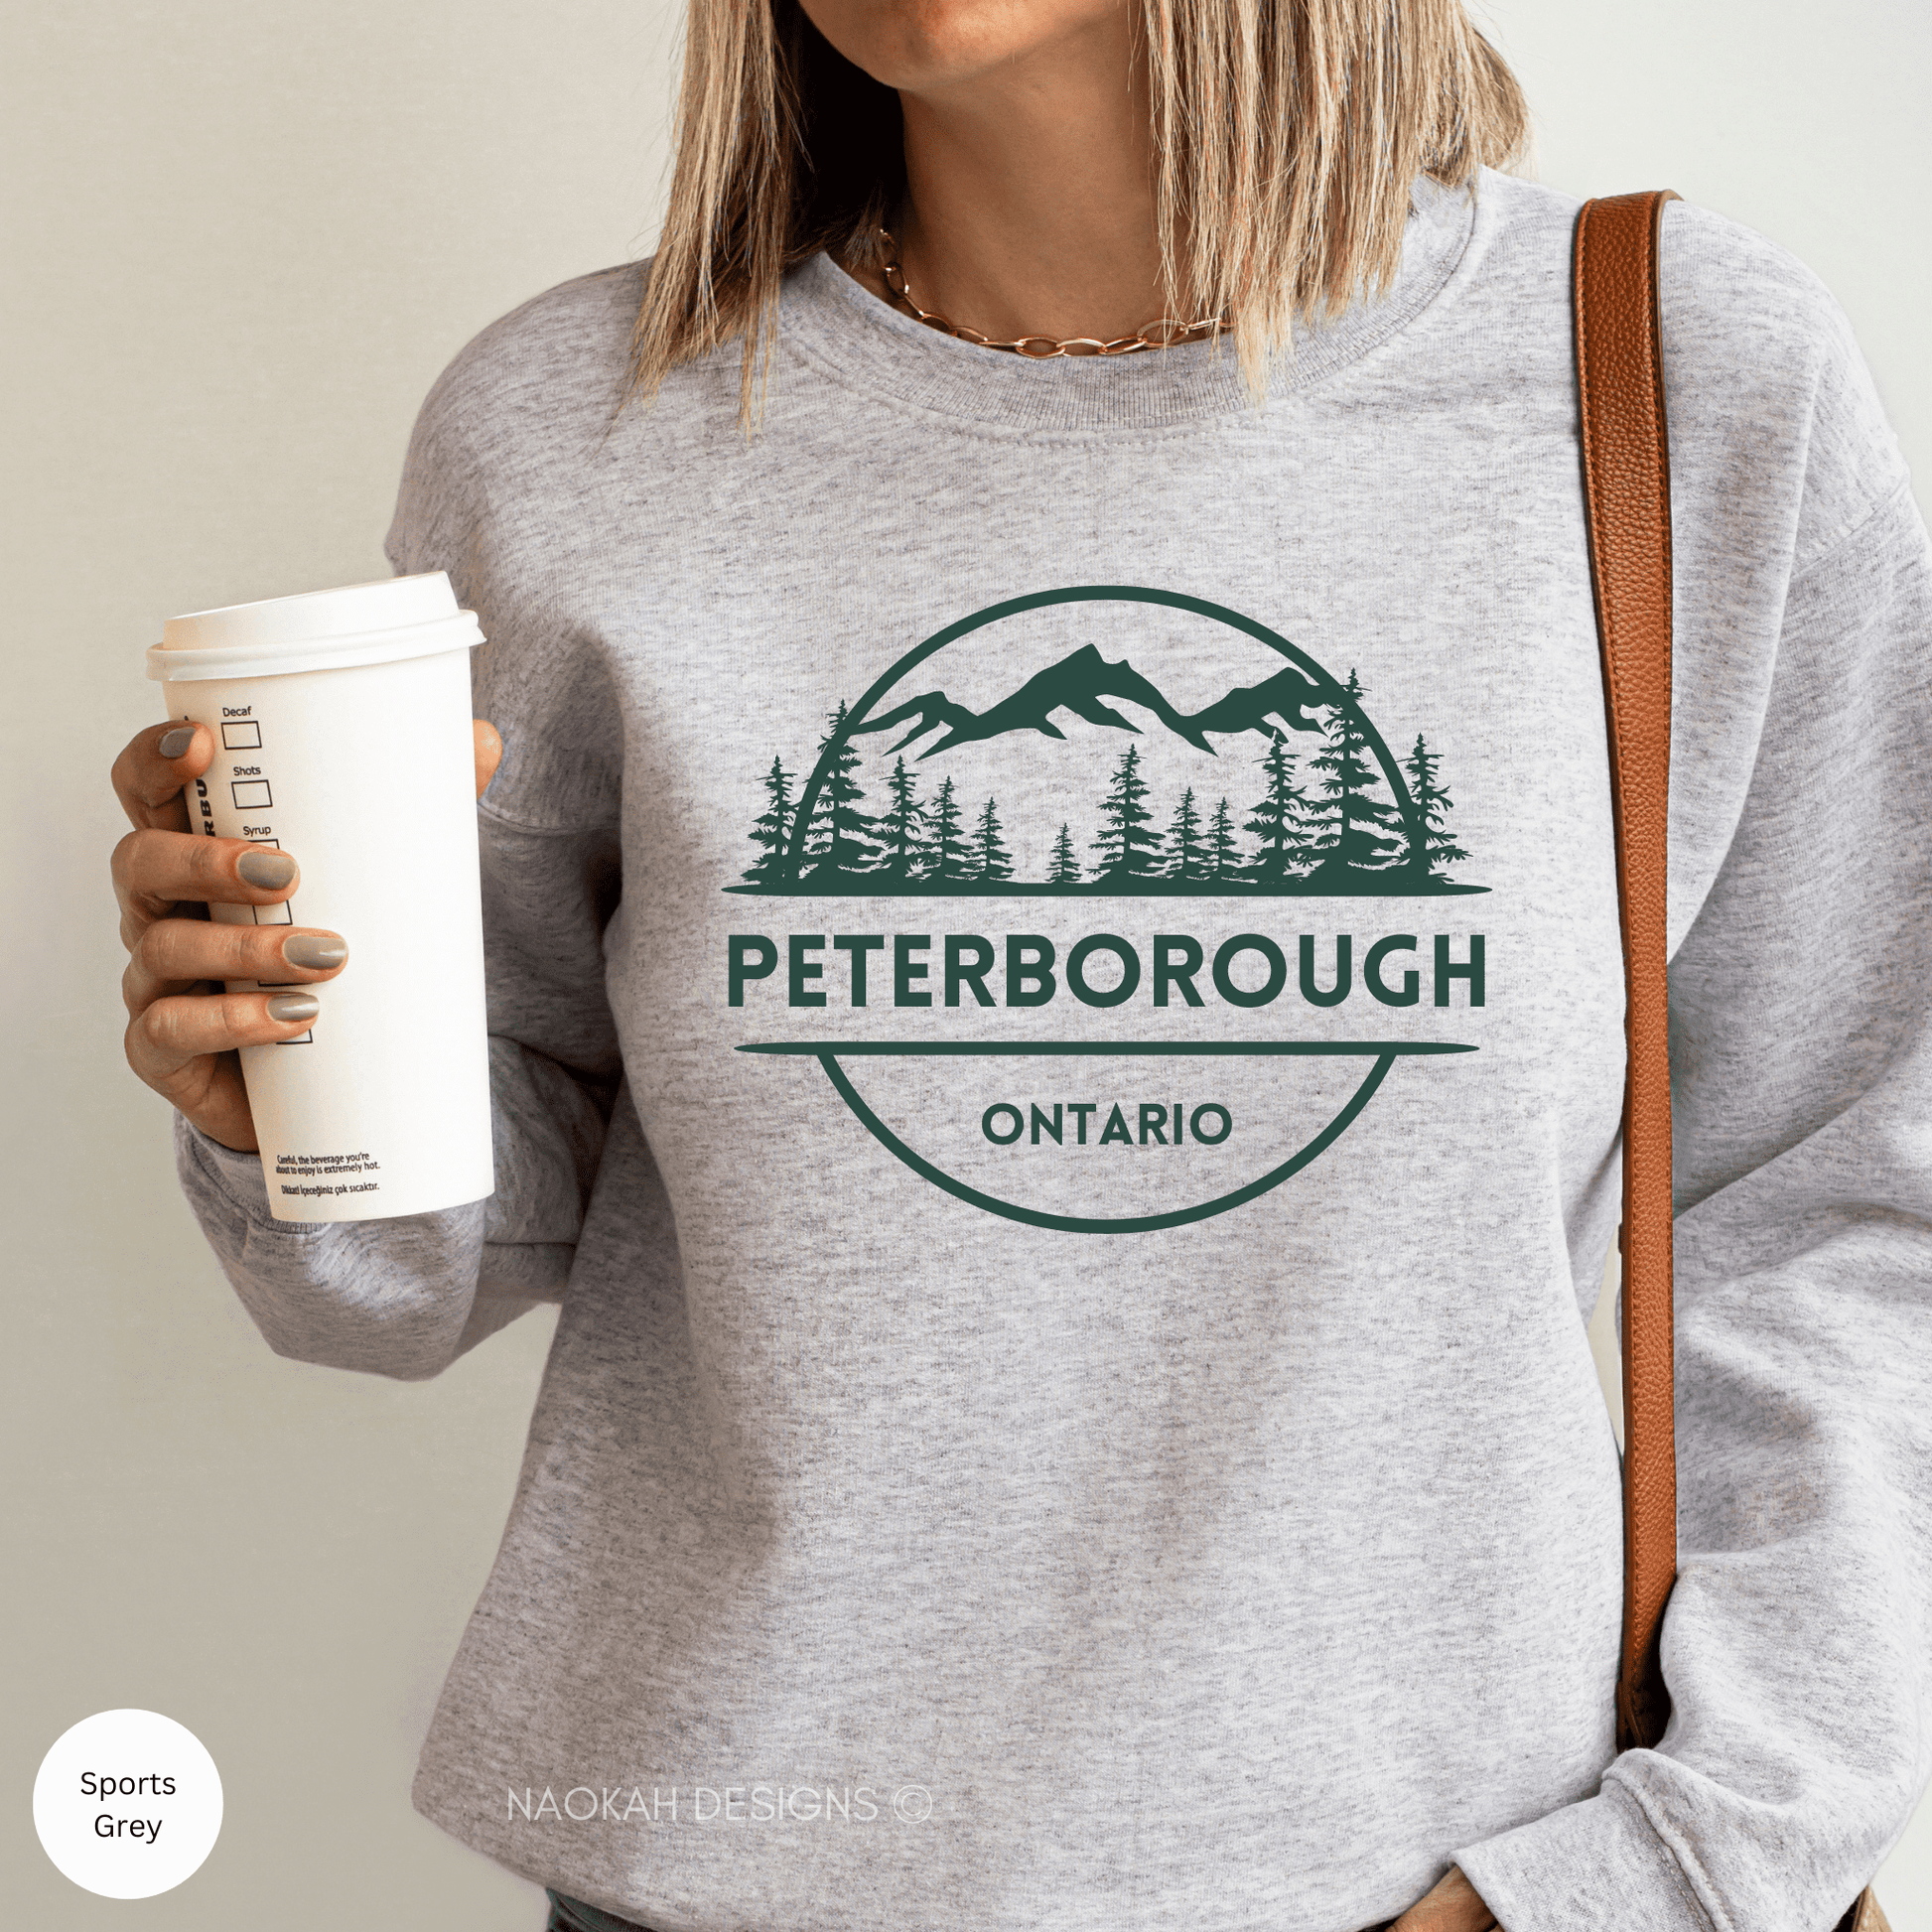 peterborough Ontario crewneck sweater, Kawartha's shirt, Ontario shirt, Peterborough shirt, Kawartha lakes, trent, nature shirt, outdoor shirt, landscape shirt, cottage country shirt